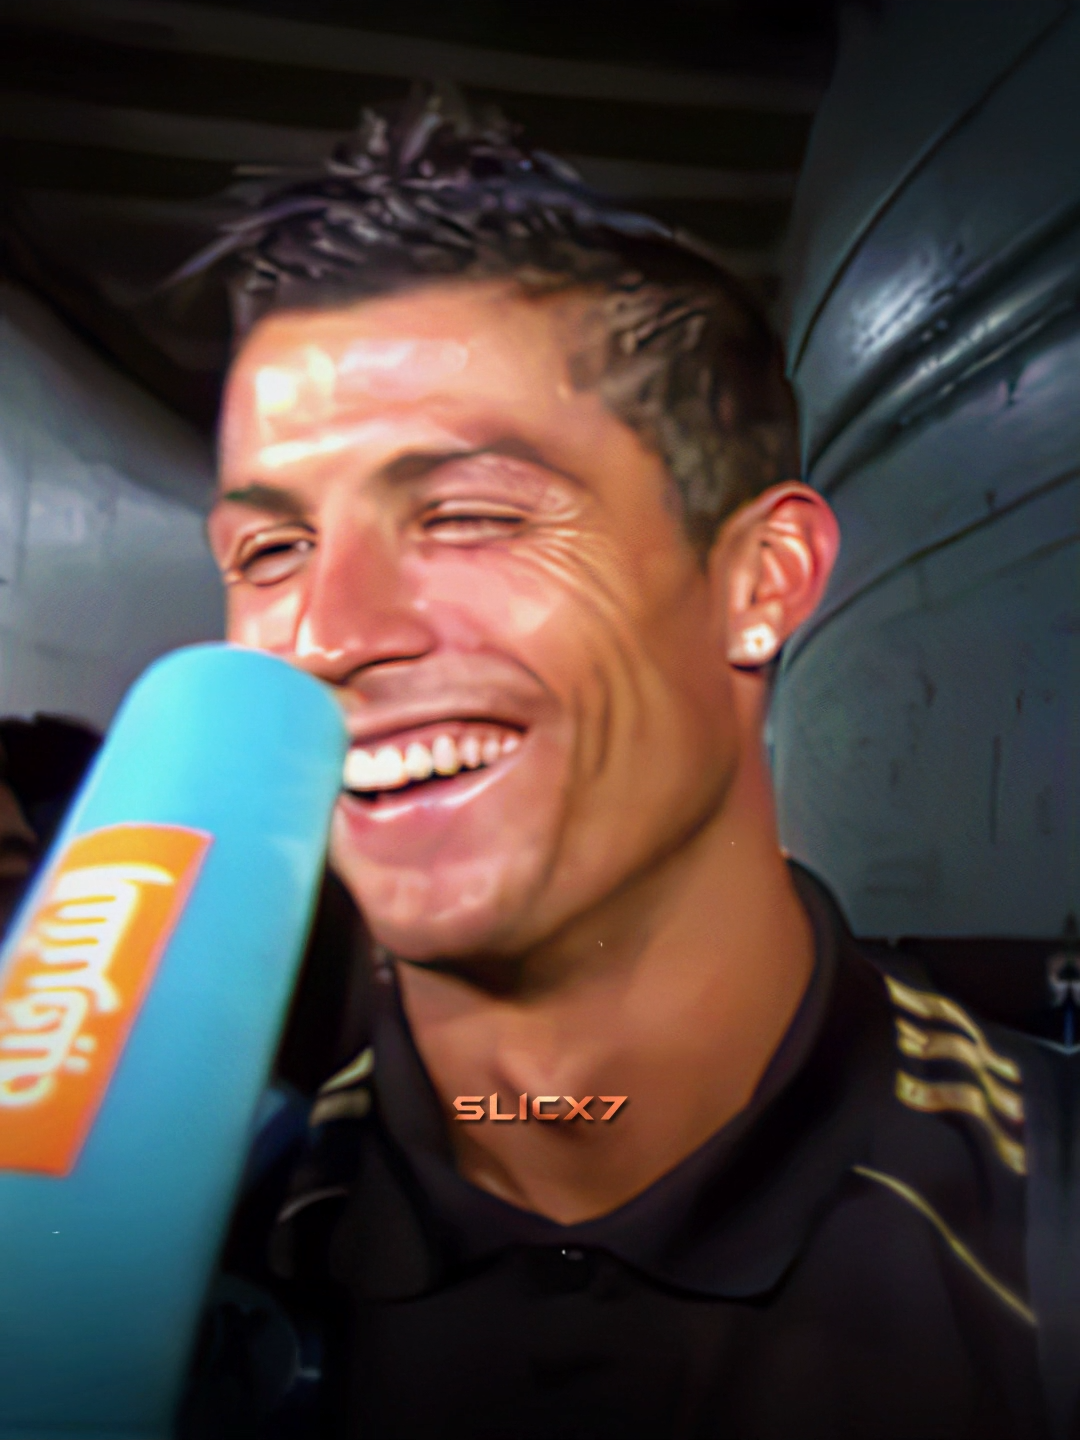 Ronaldo makes fun of him 😅 #cristianoronaldo #interview #football #edit #fypシ #viral